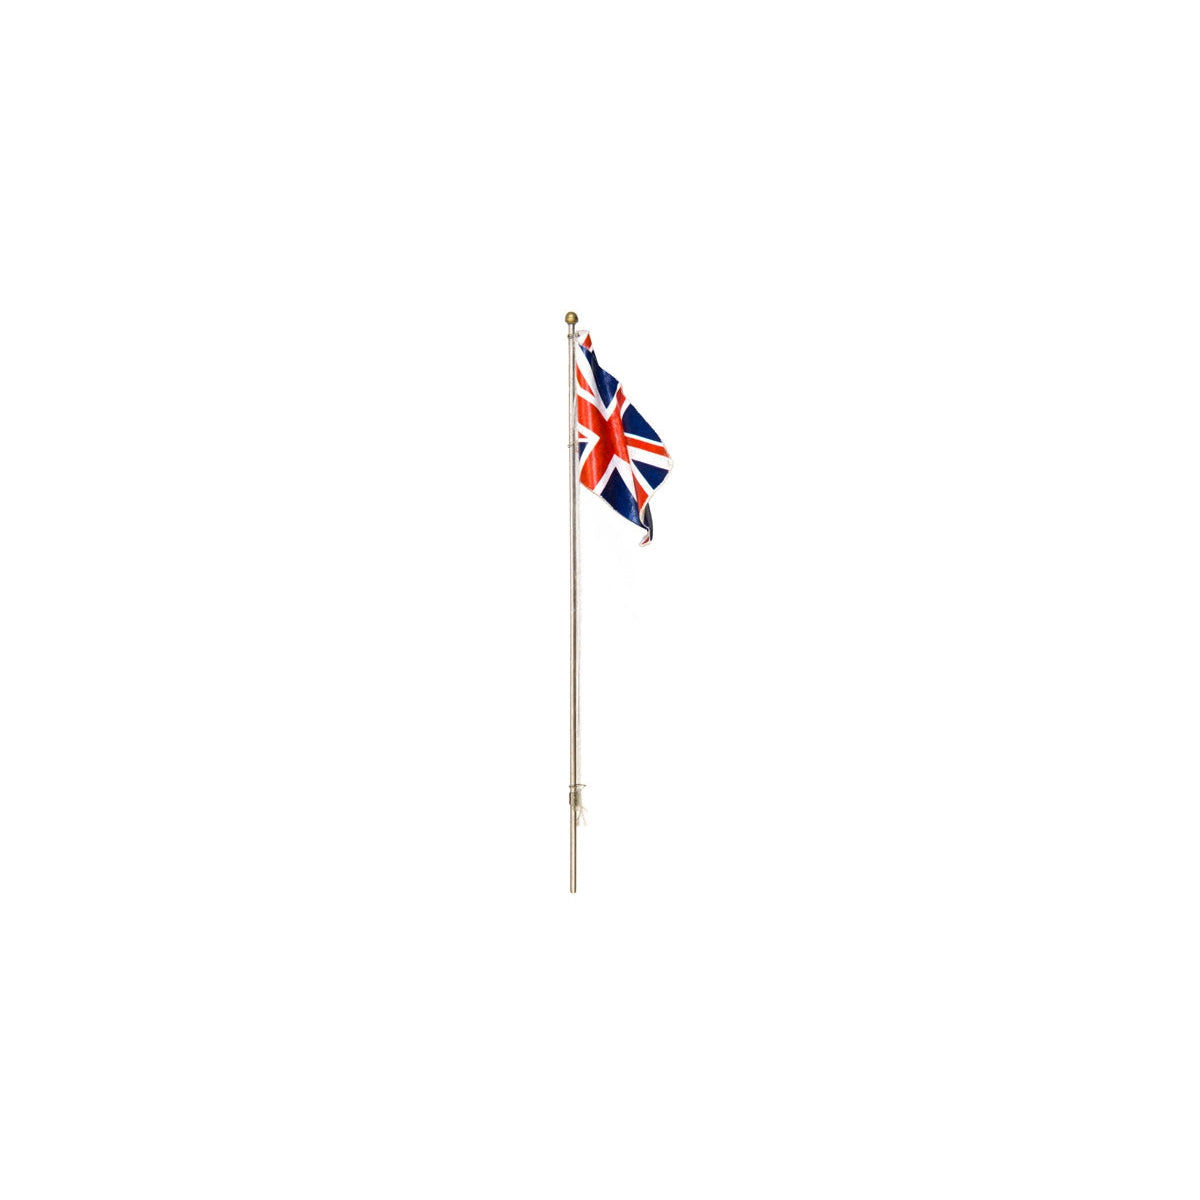 Woodland Scenics Medium Union Jack Flag-Pole